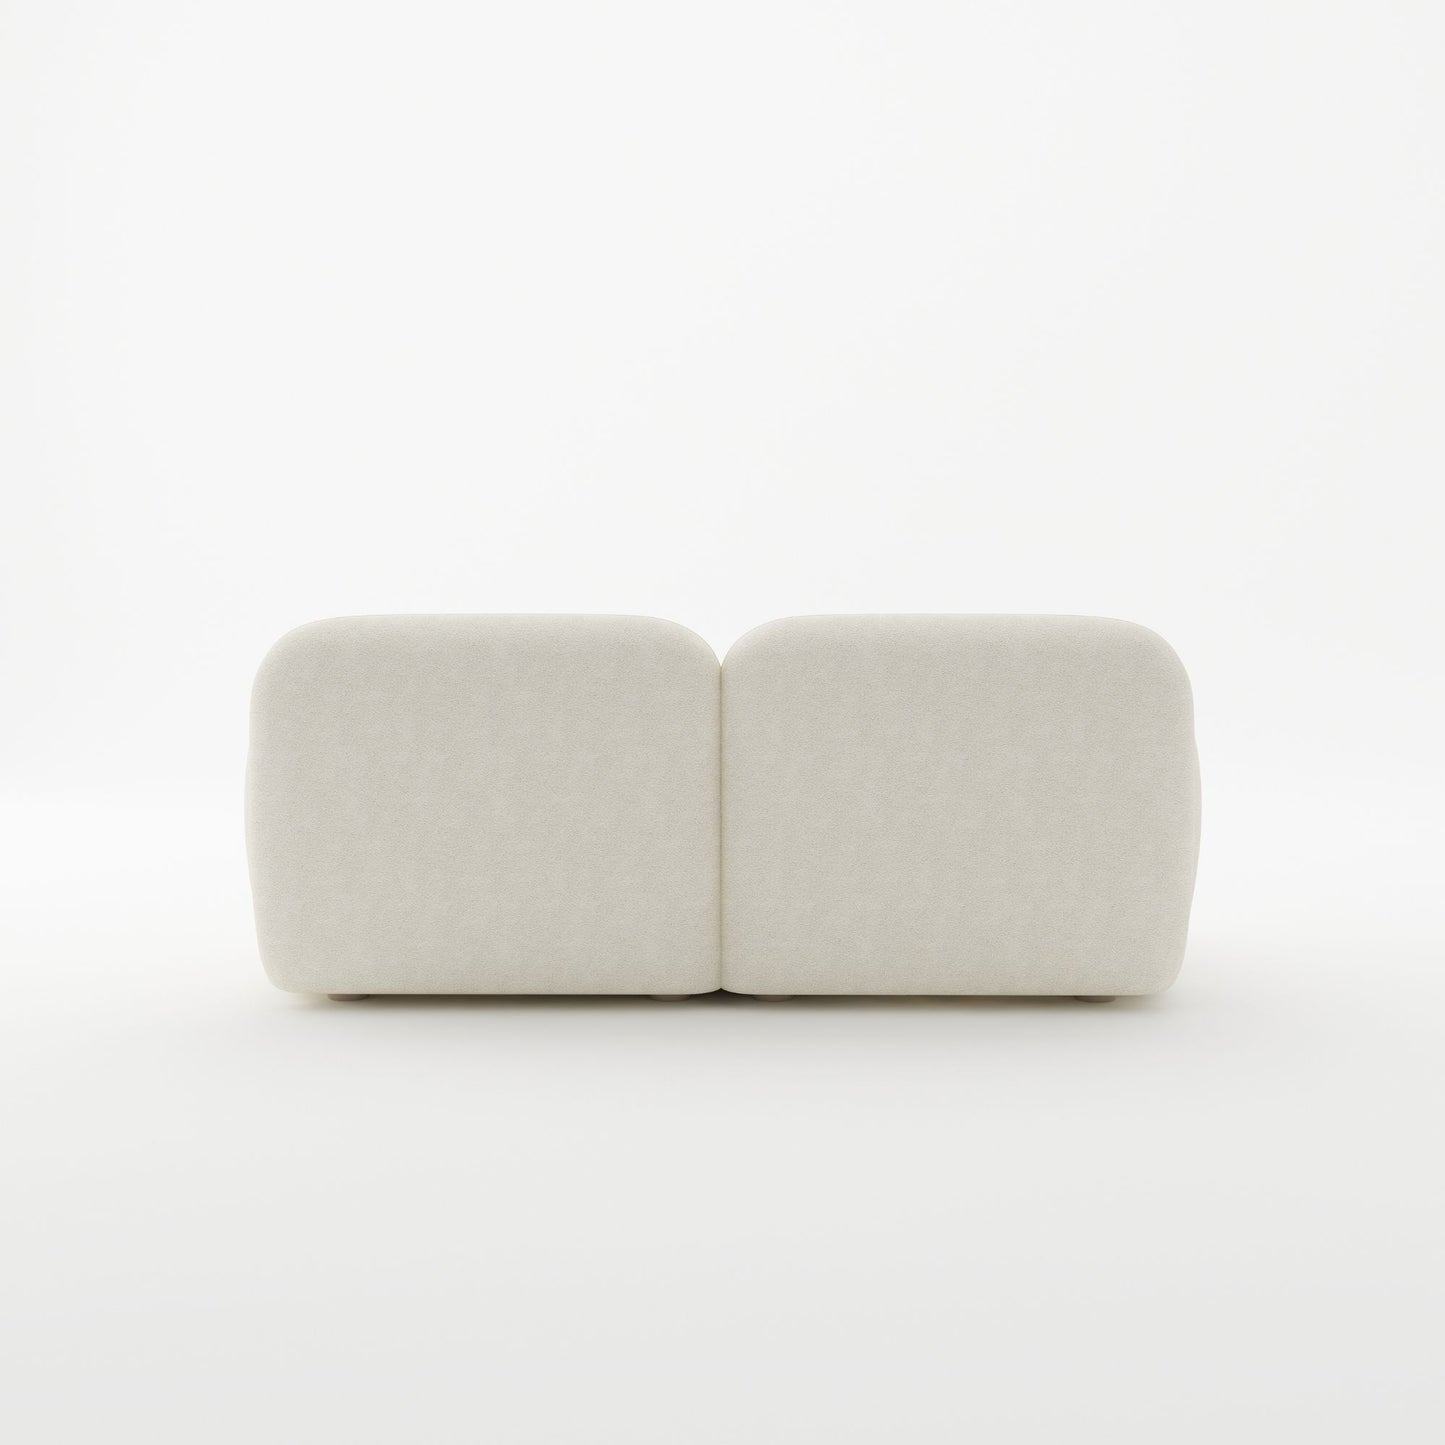 Charmy white fabric 2 seat sofa